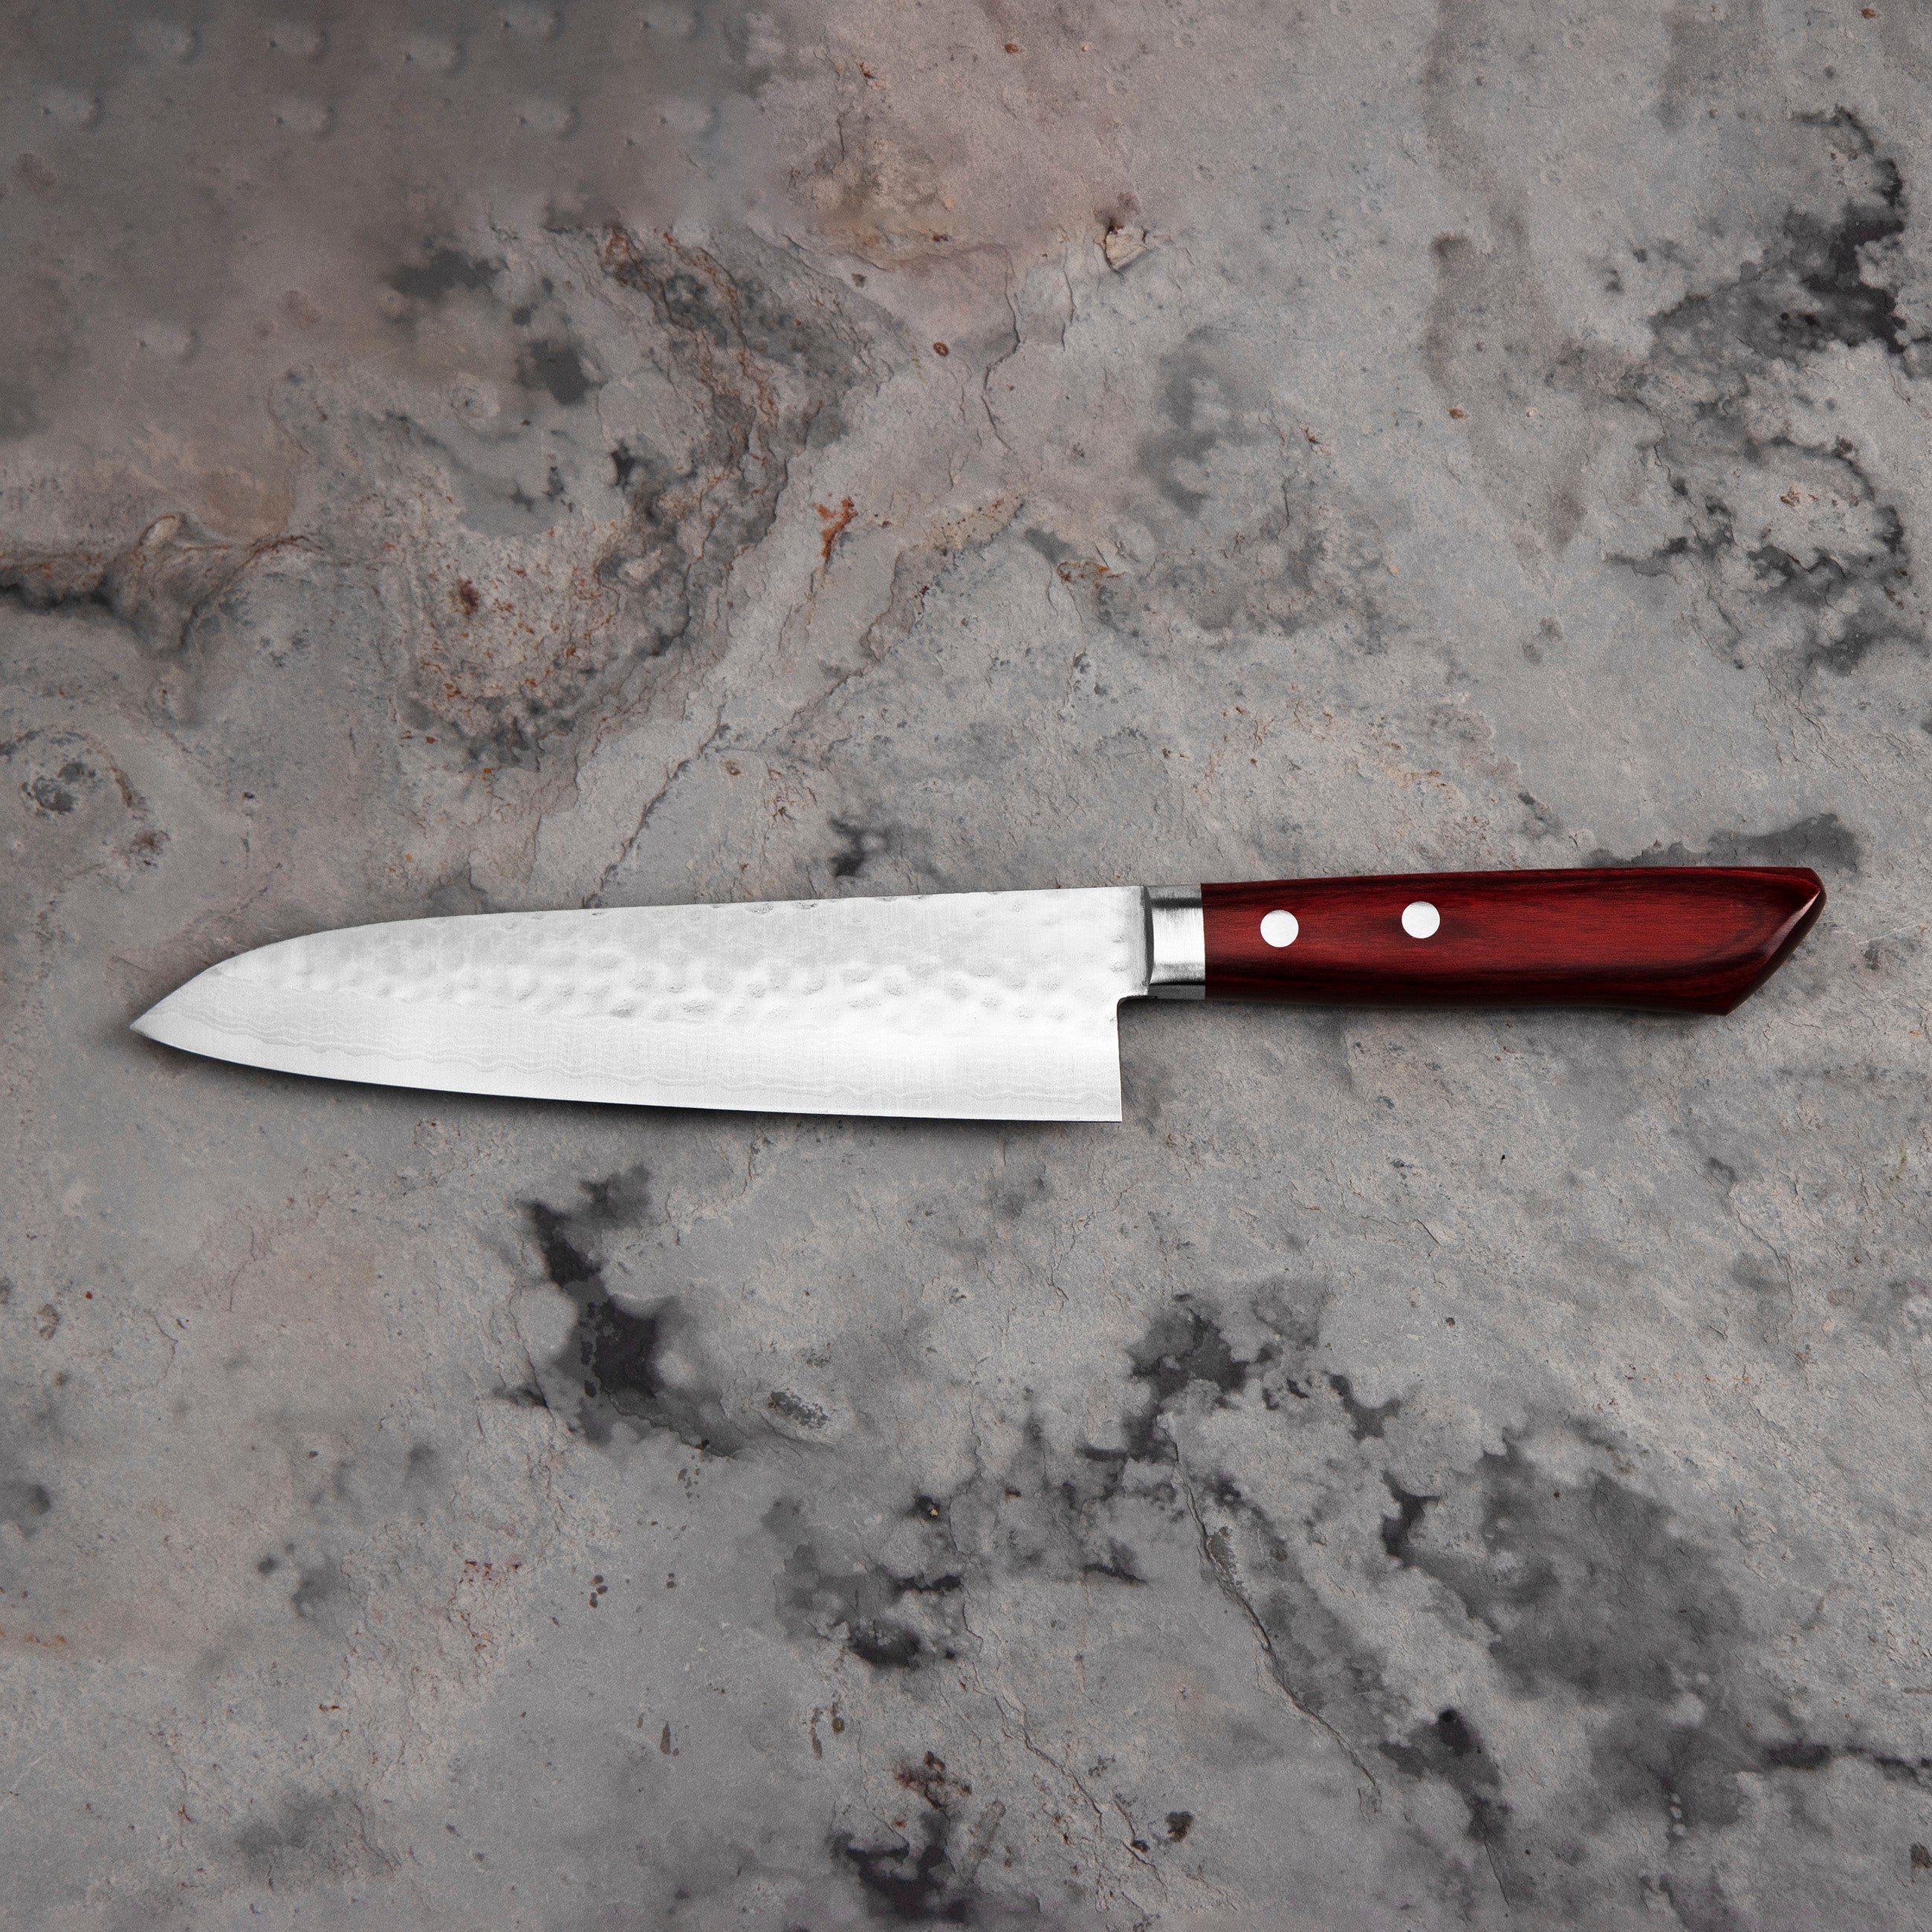 Nůž šéfkuchařský 18 cm Kunio Masutani VG-10 Hammered Red Damascus